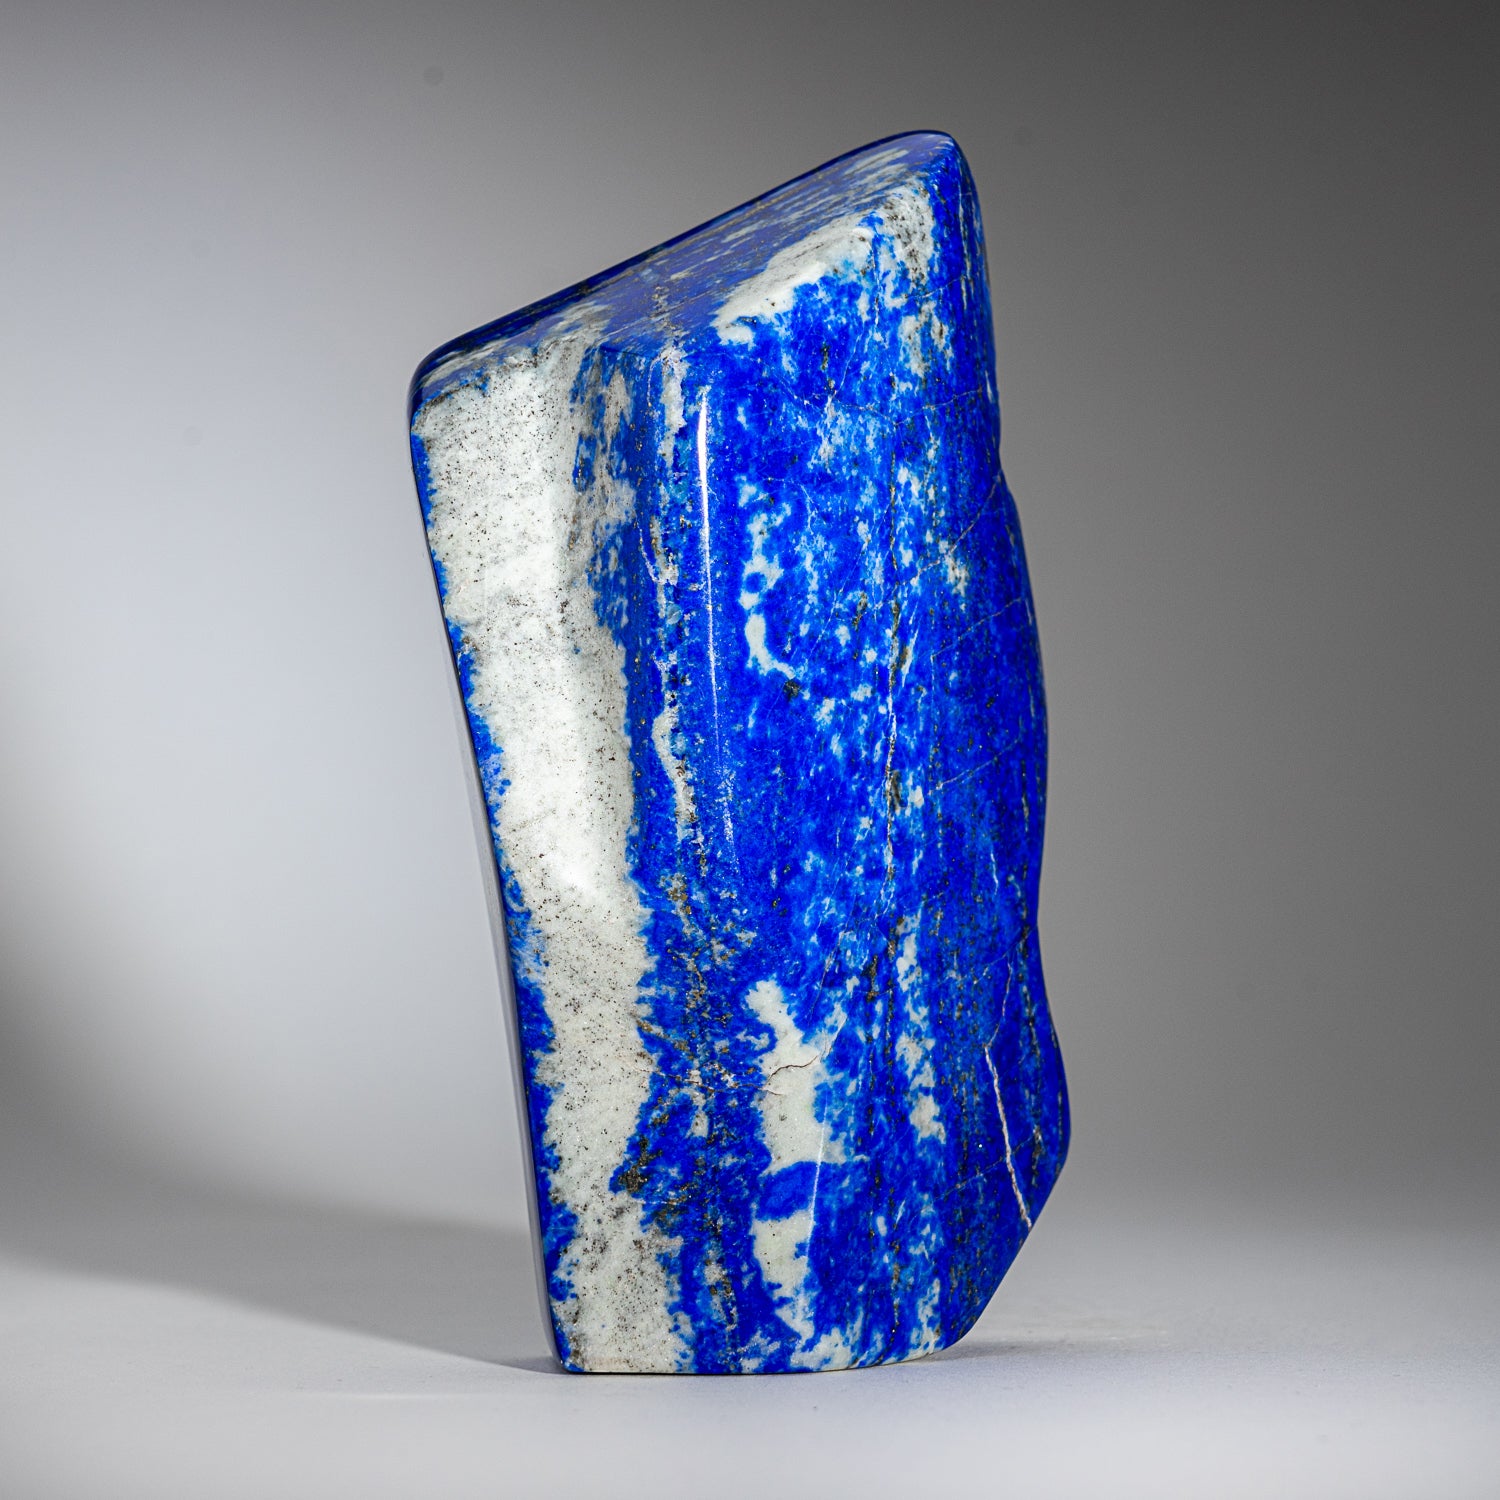 Polished Lapis Lazuli Freeform from Afghanistan (1.5 lbs)